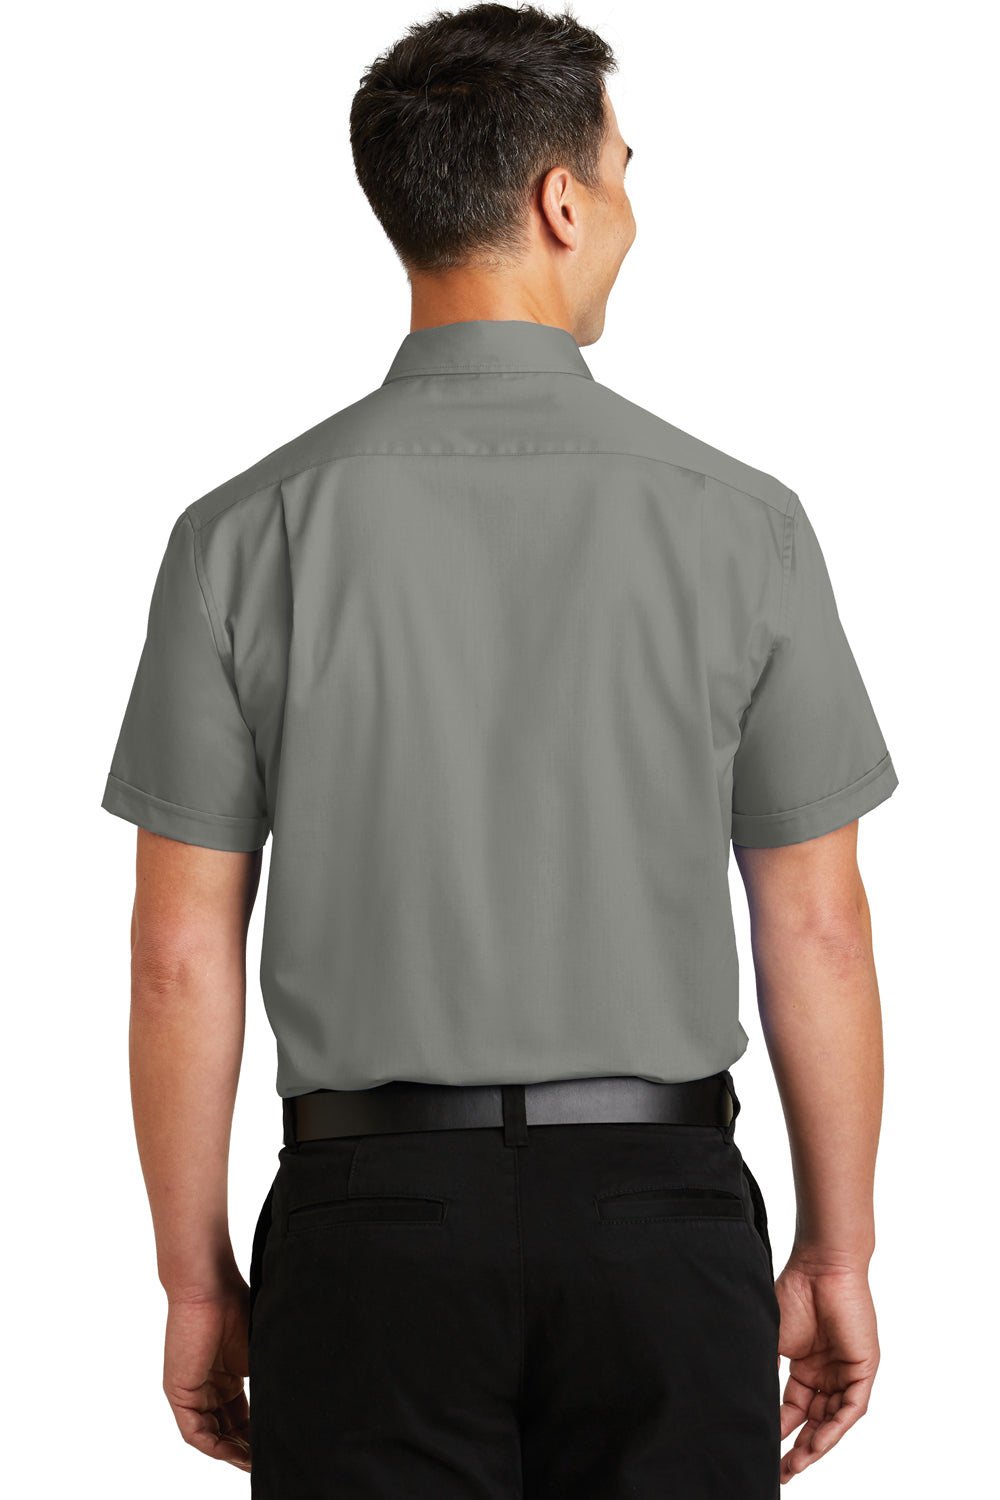 Port Authority S664 Mens SuperPro Wrinkle Resistant Short Sleeve Button Down Shirt w/ Pocket Monument Grey Back